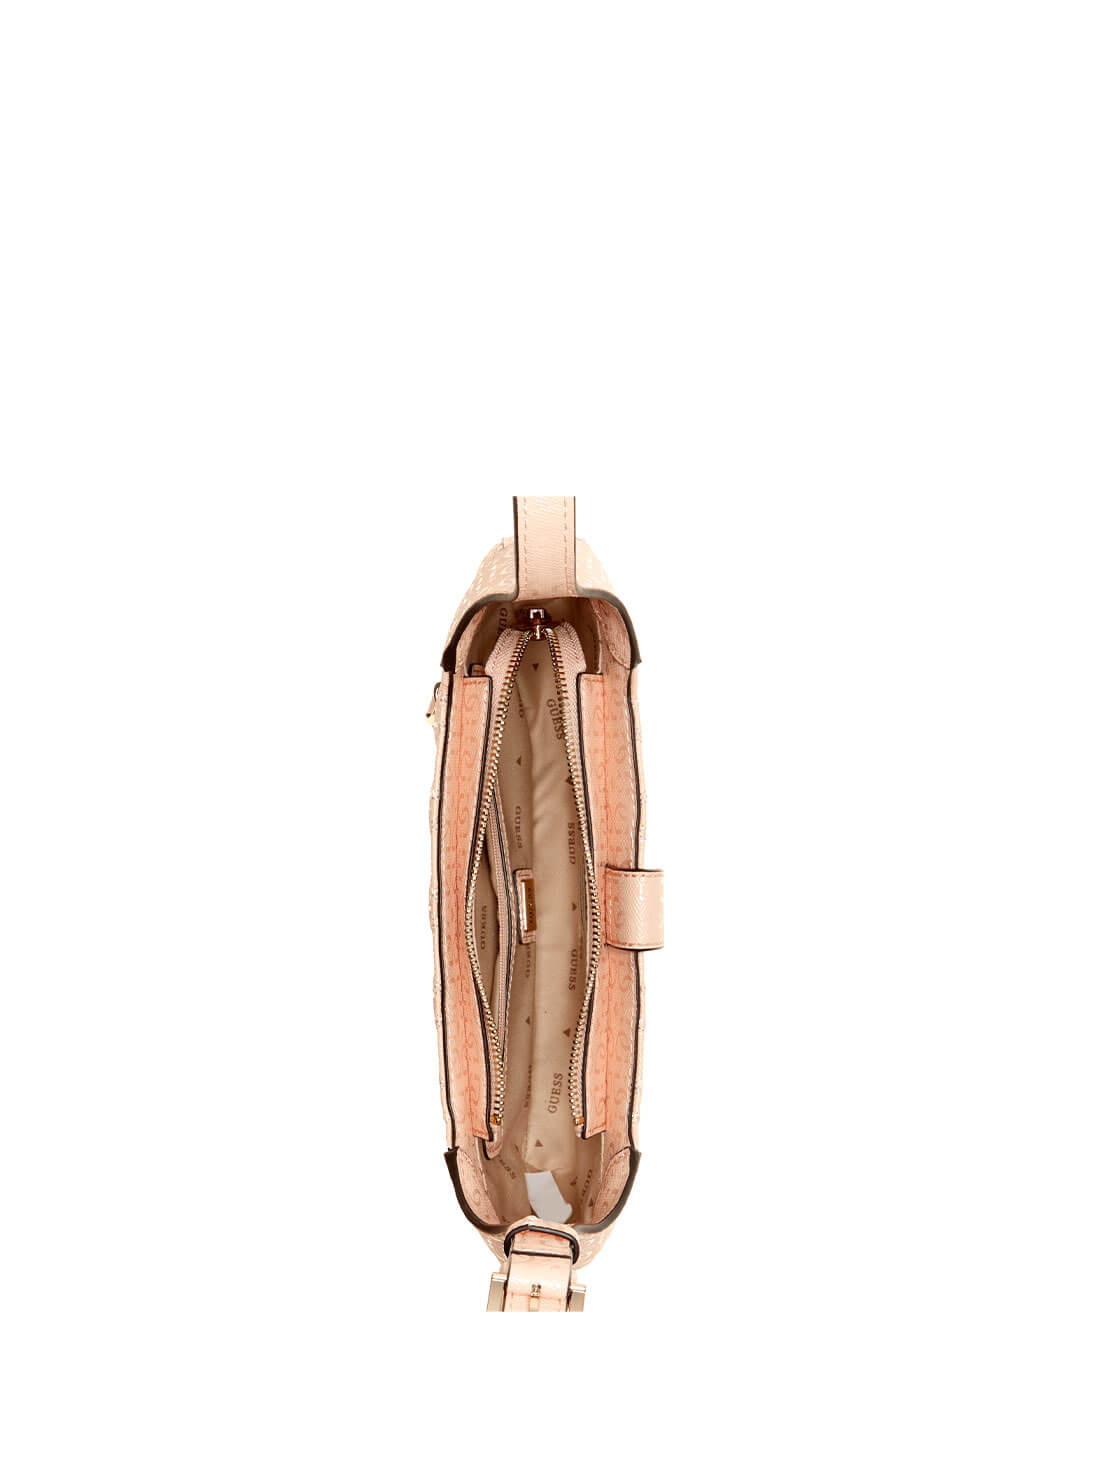 Light Peach Adi Convertible Crossbody Bag | GUESS Women's Handbags | inside view